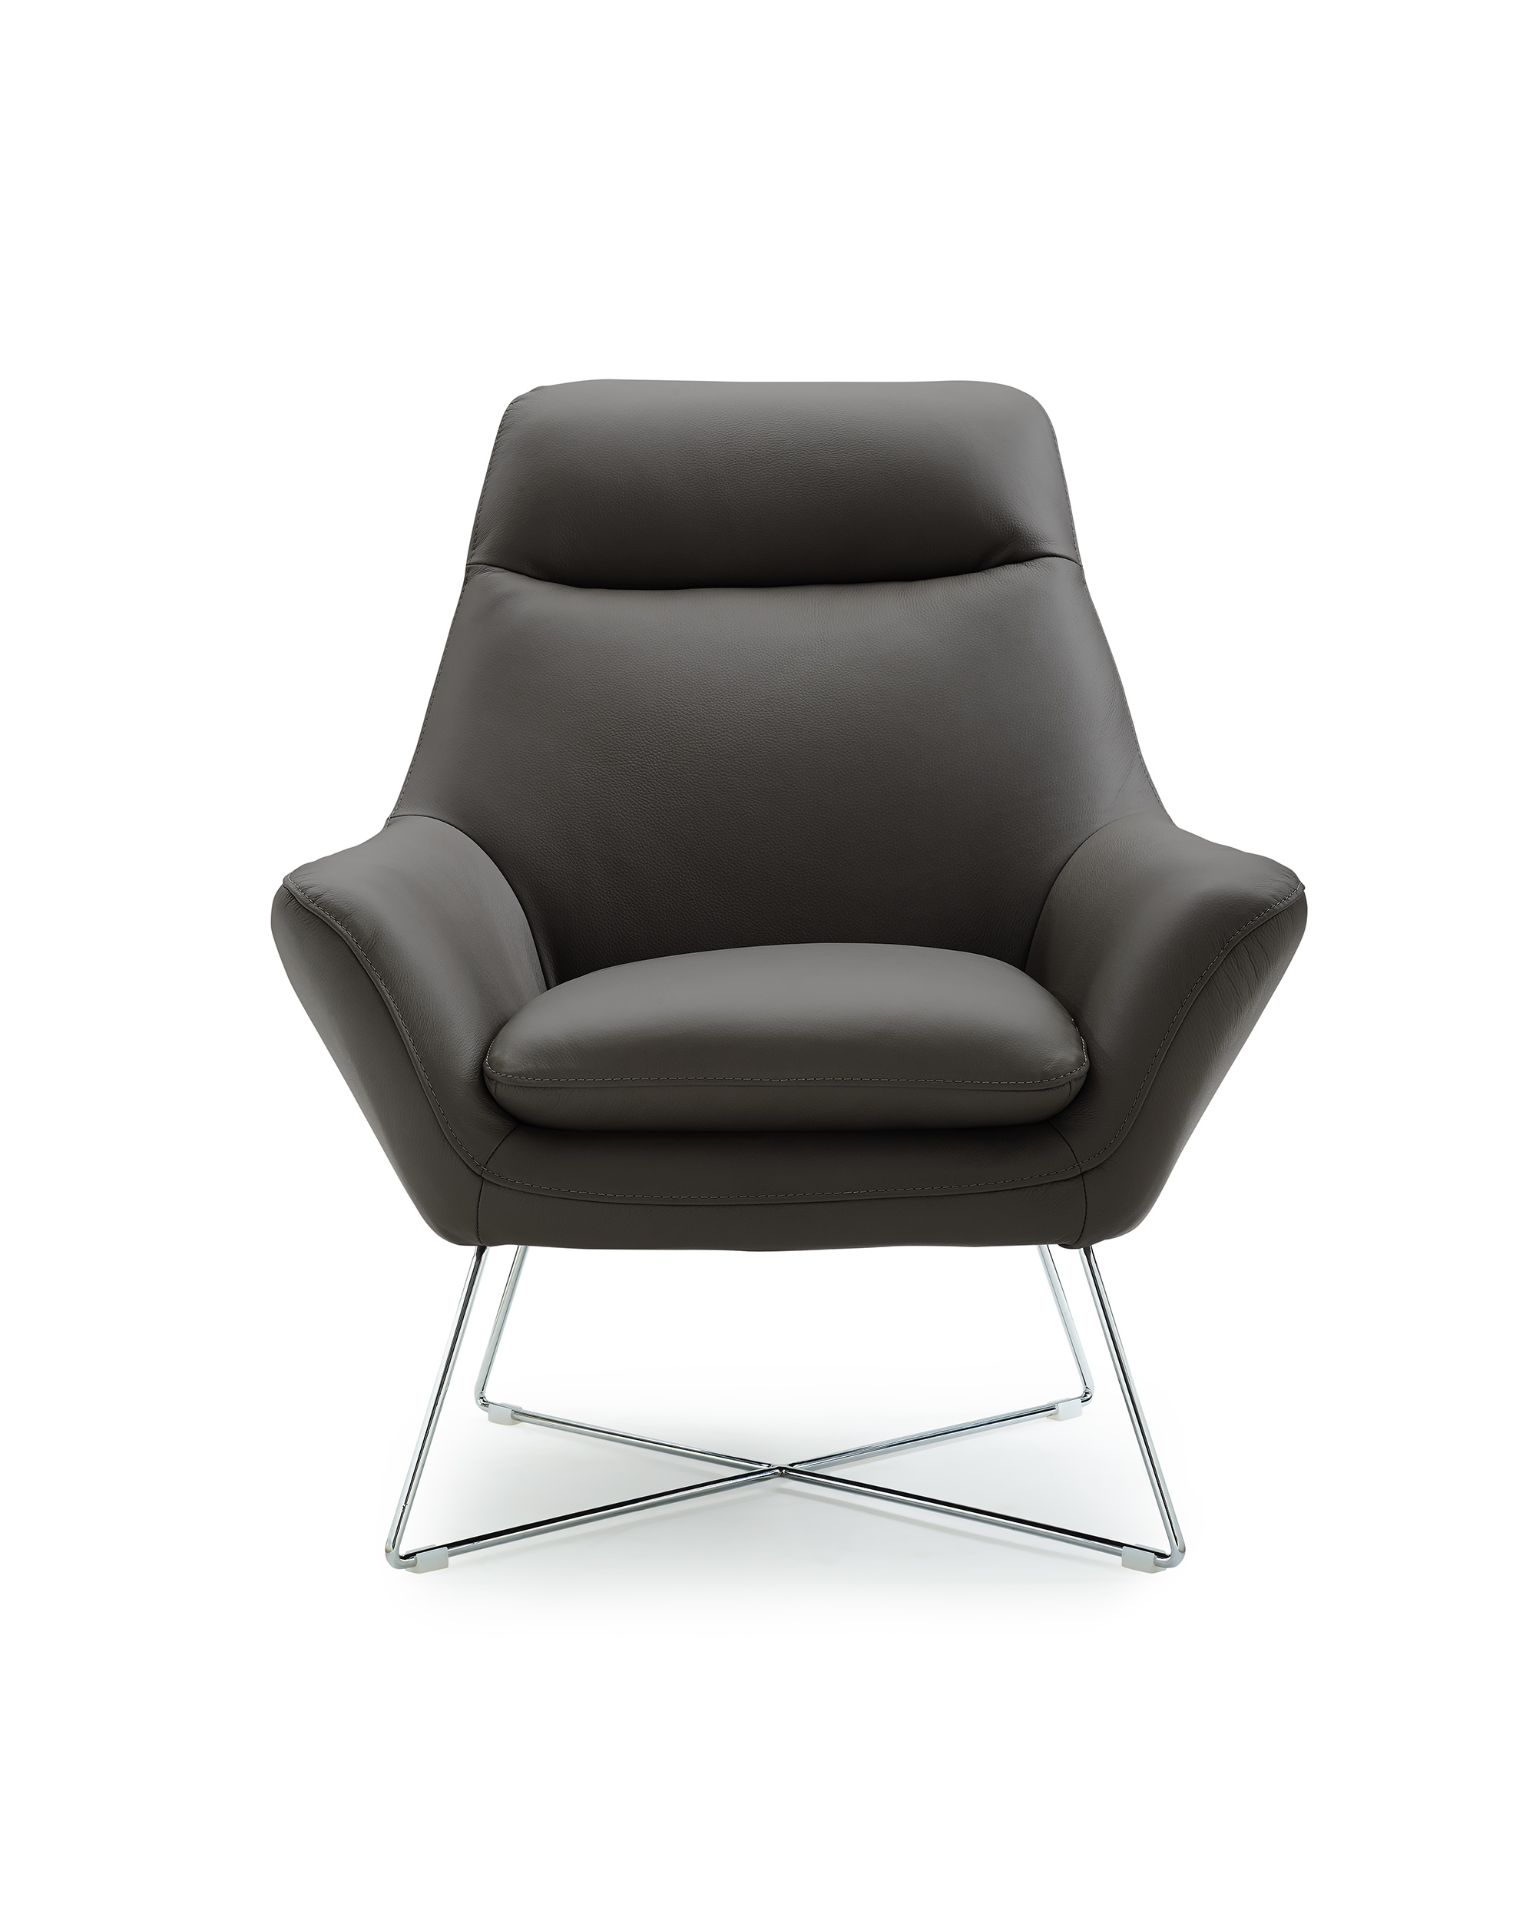 modern leather arm chair with sleek metal frame